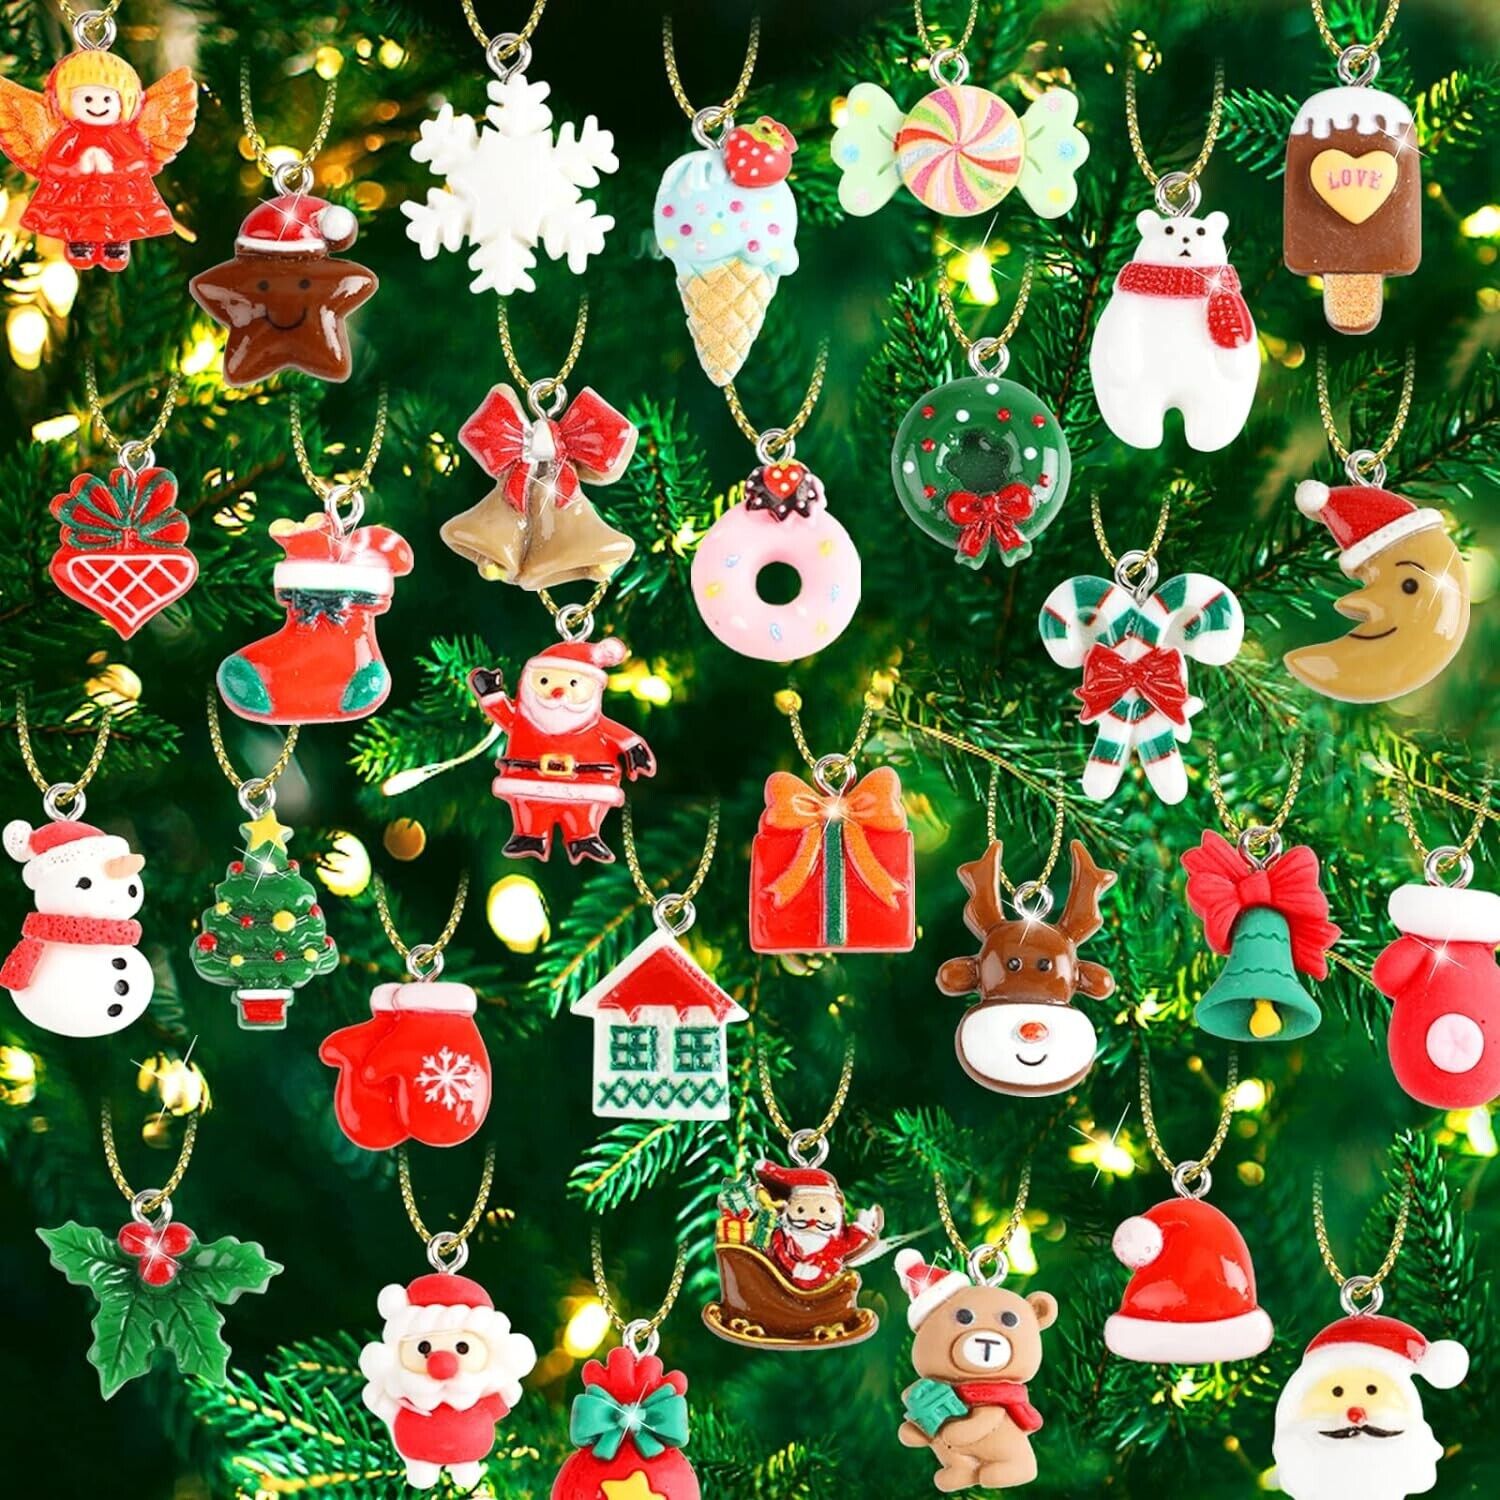 42 pcs Mini Christmas Ornaments, Miniature Resin Christmas Tree Ornaments for